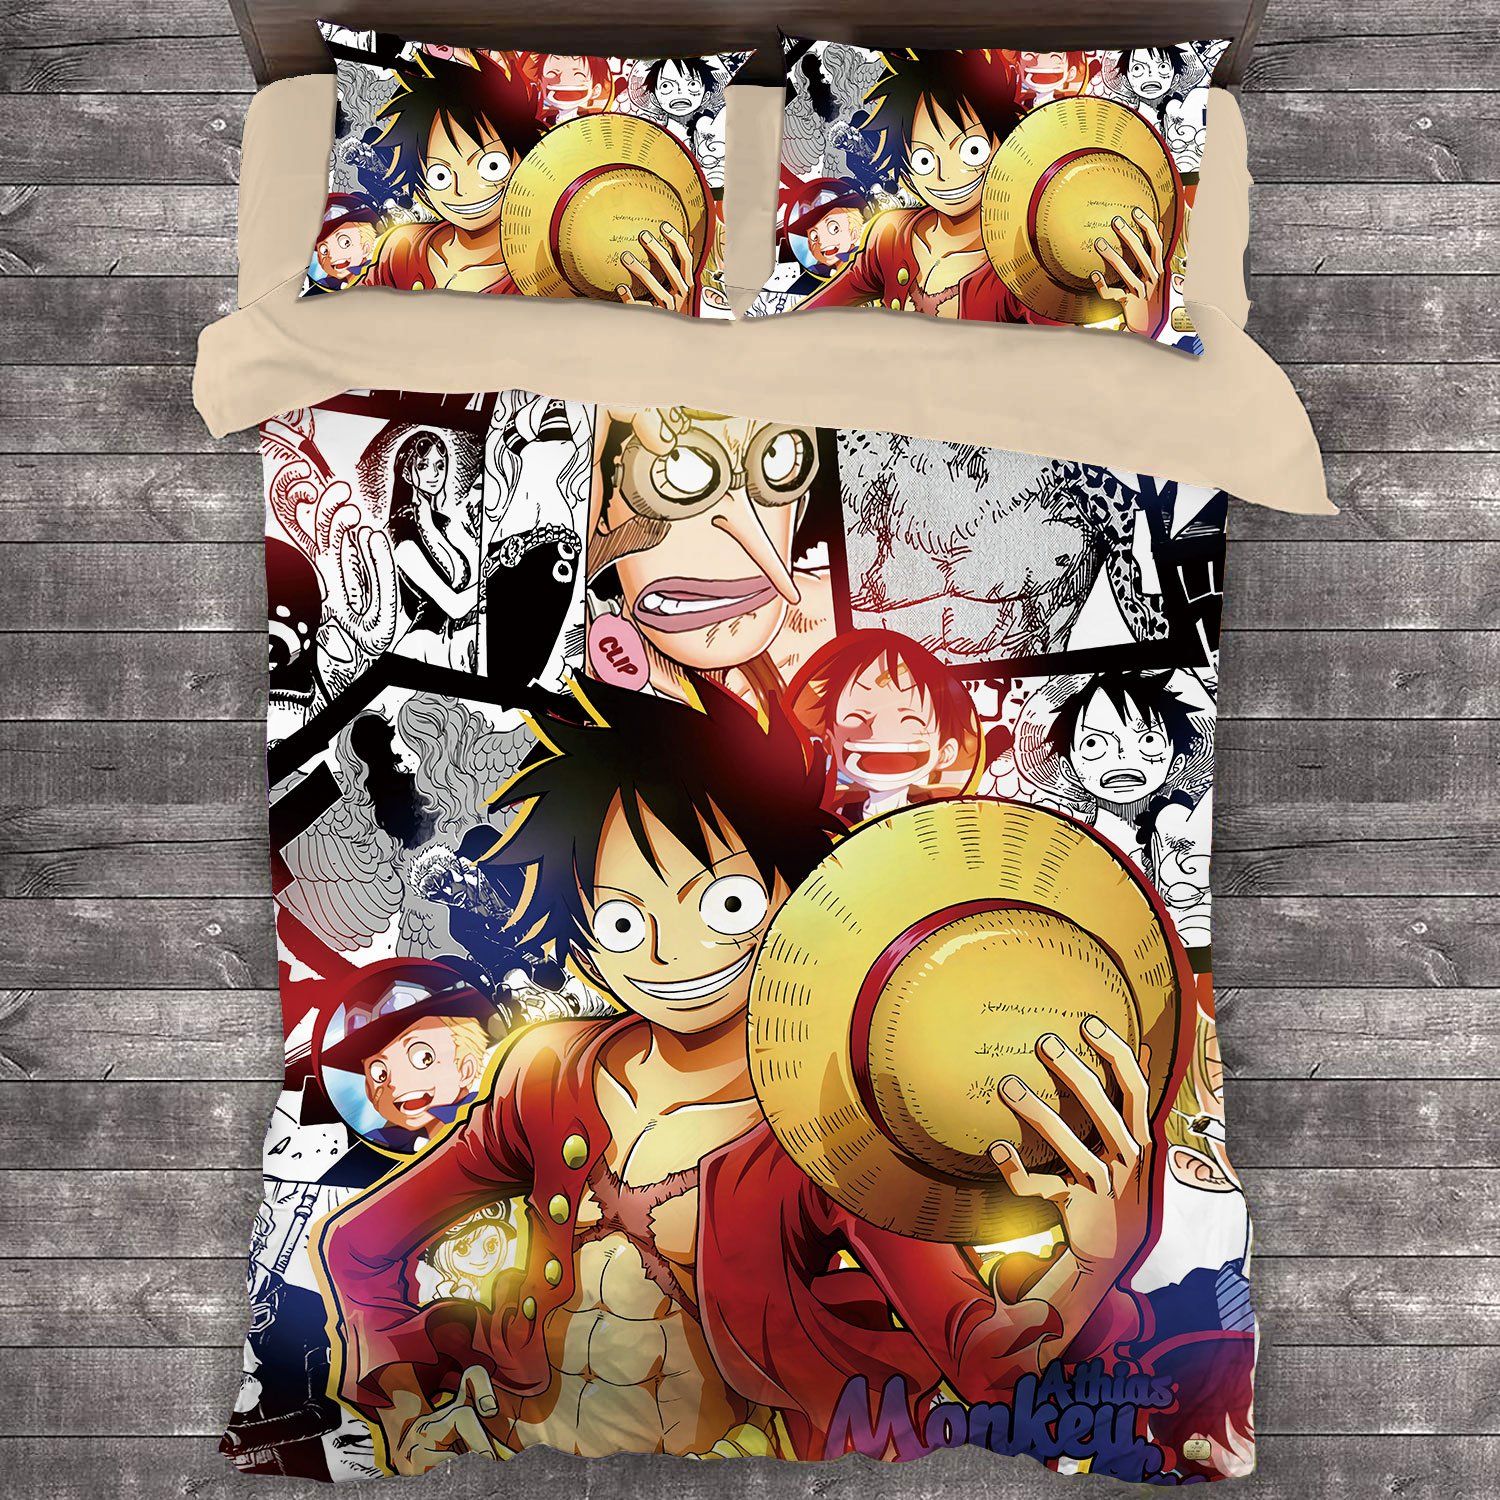 Comic One Piece 3 Duvet Cover Quilt Cover Pillowcase Bedding